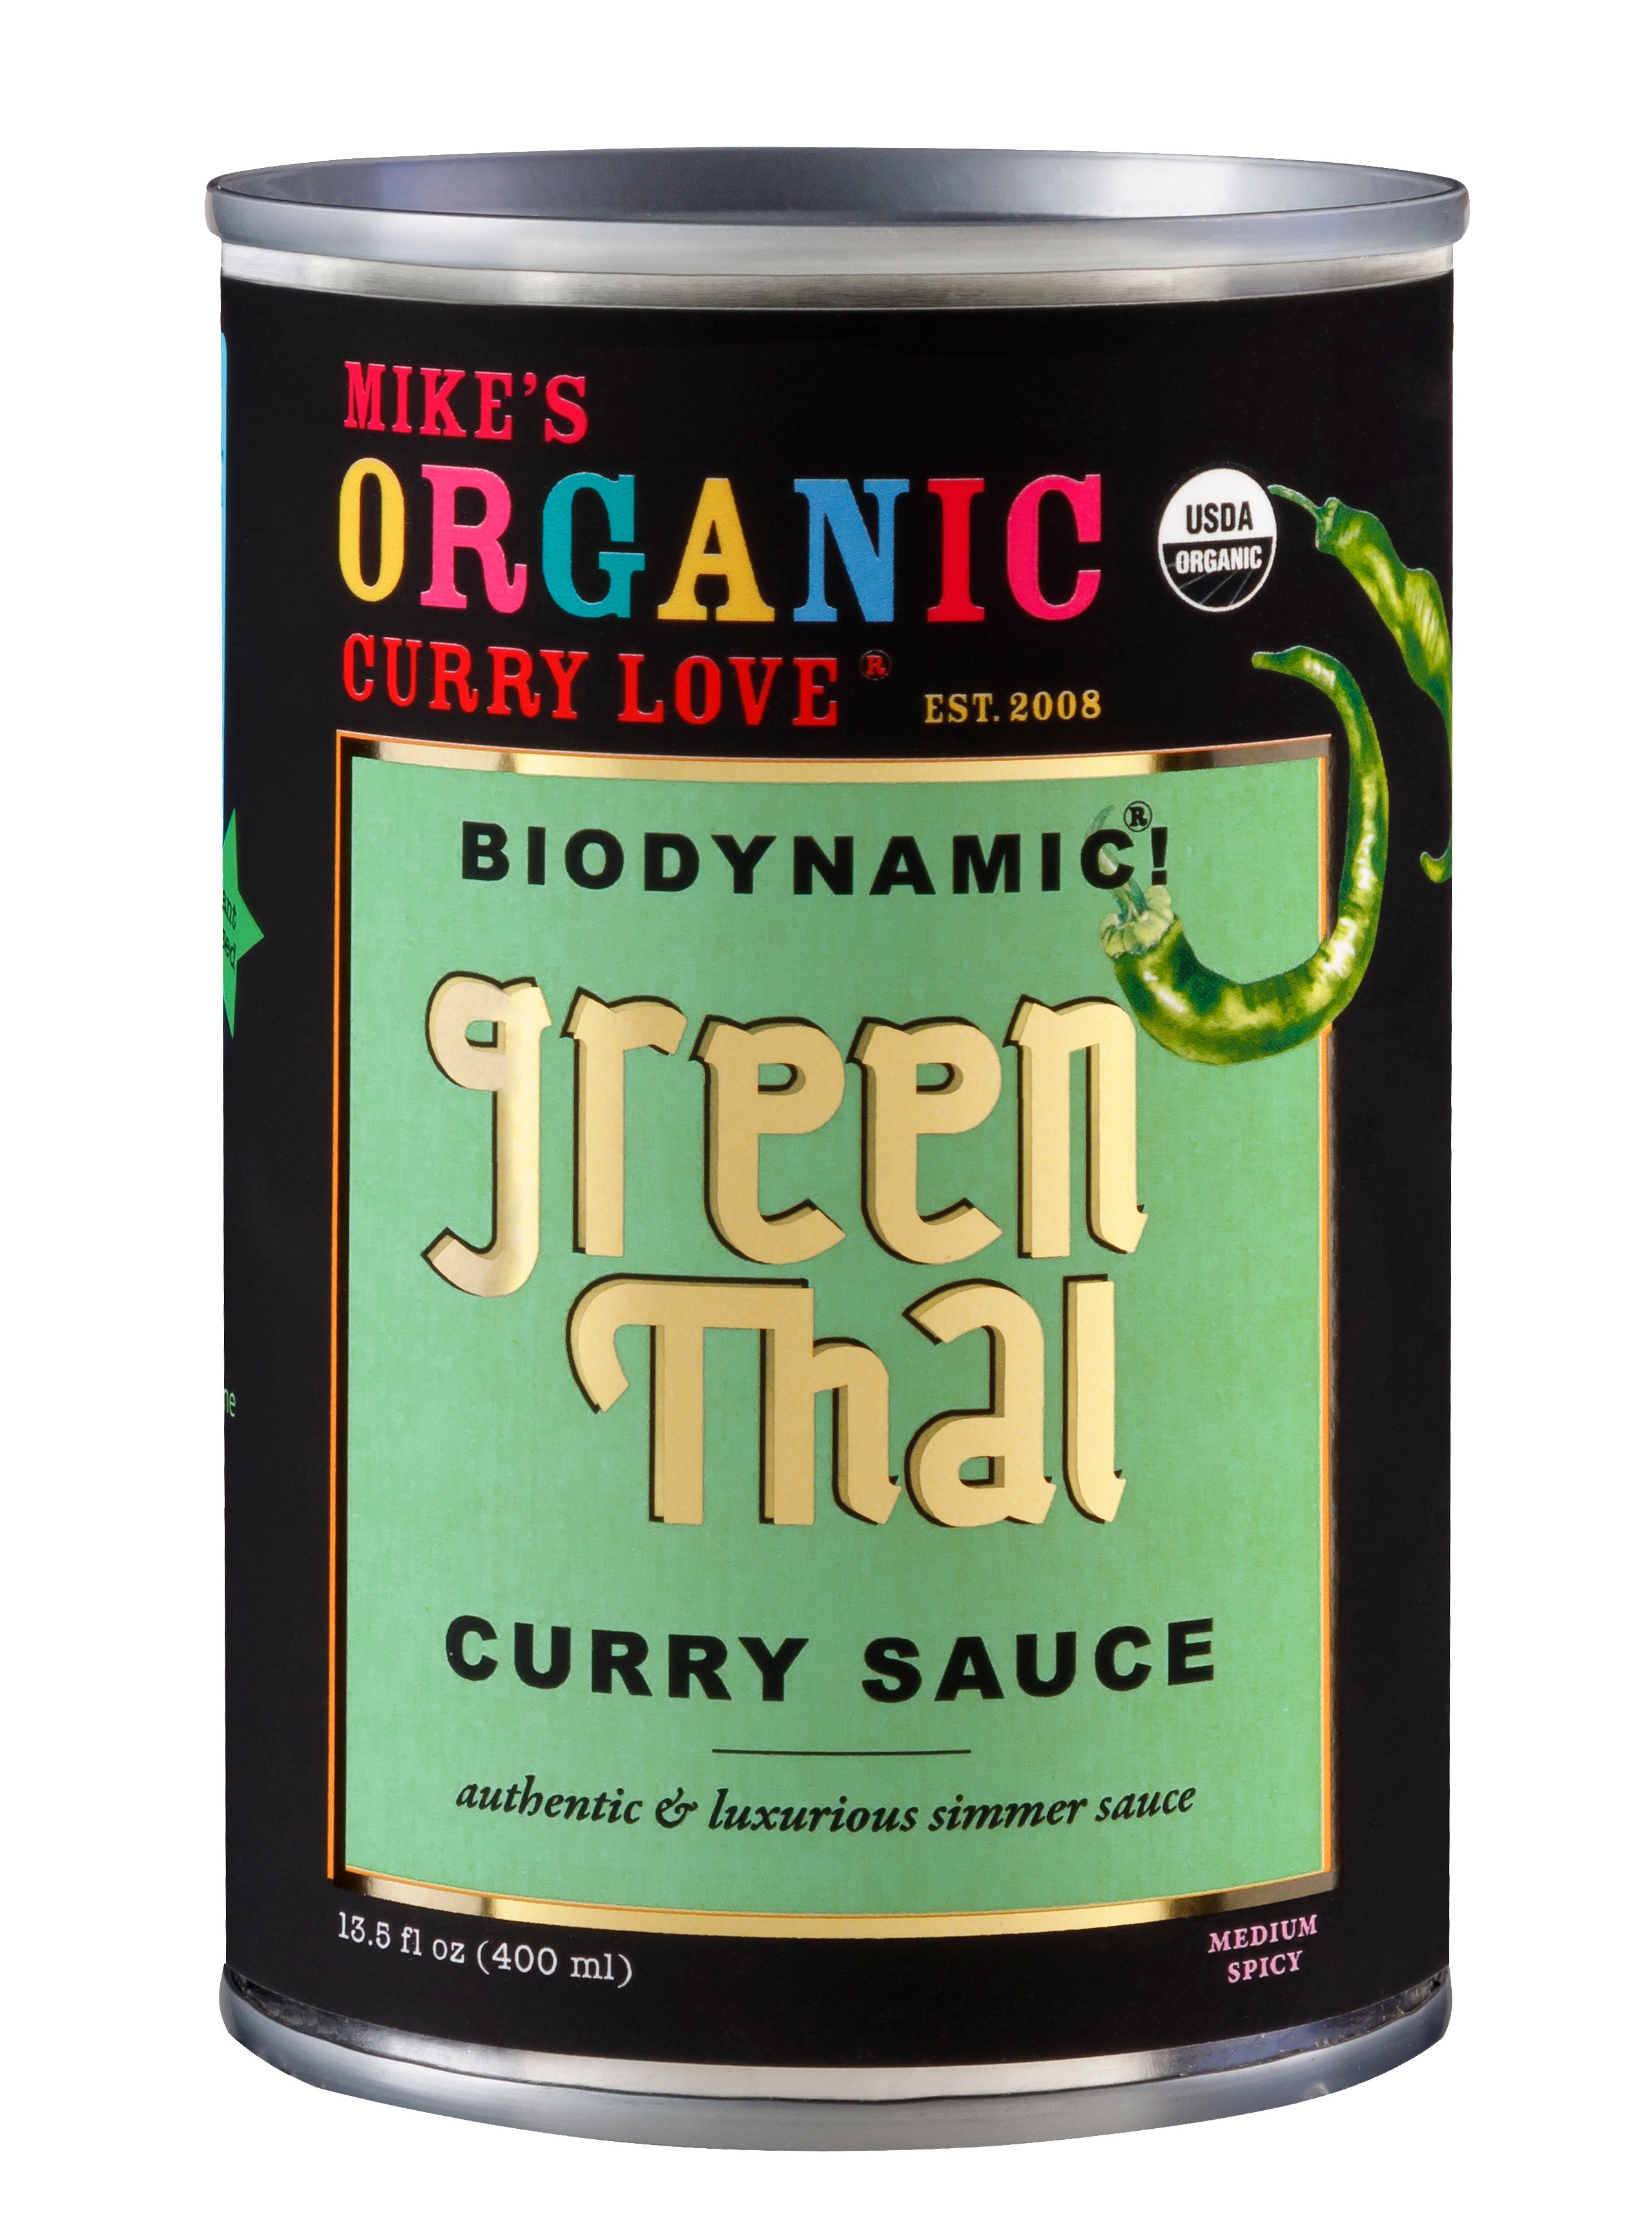 Organic & Biodynamic Green Thai Curry Sauce - 1 x 13.5 fl oz Tin Can